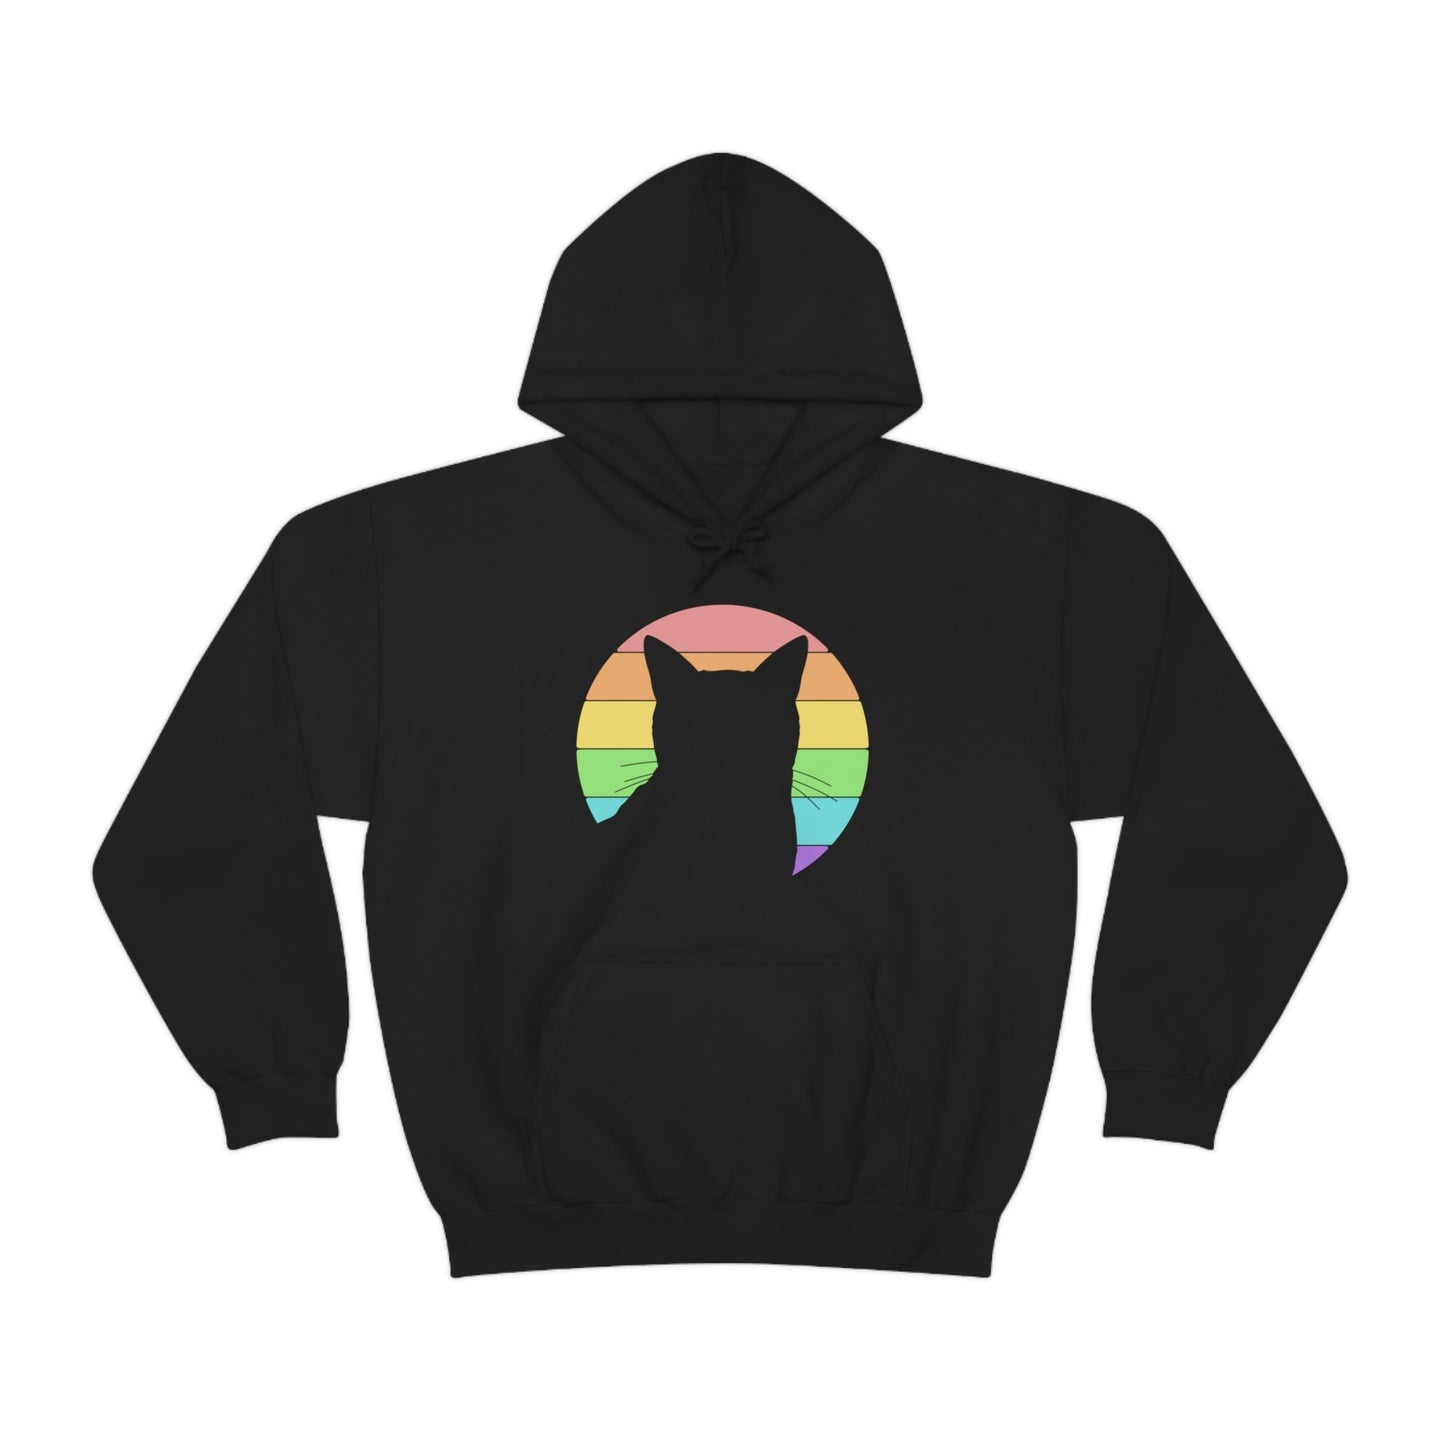 LGBTQ+ Pride | Cat Silhouette | Hooded Sweatshirt - Detezi Designs-33588194565721917090